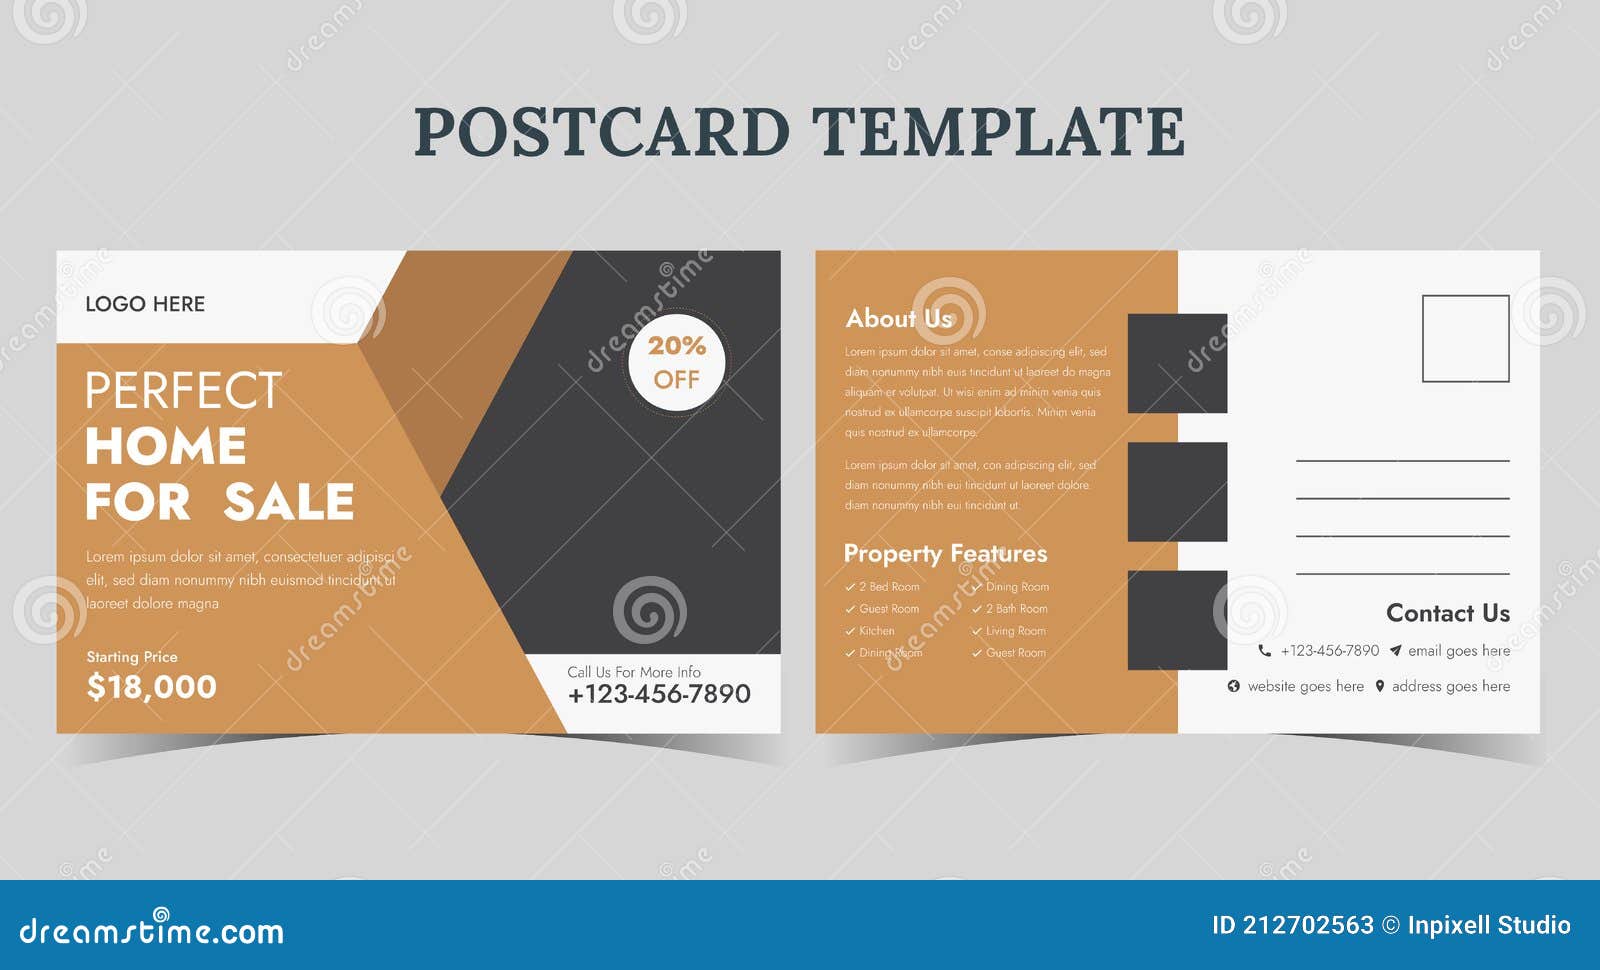 Real Estate Postcard Template, Home for Sale Postcard, Postcard Intended For Real Estate Postcard Design Templates